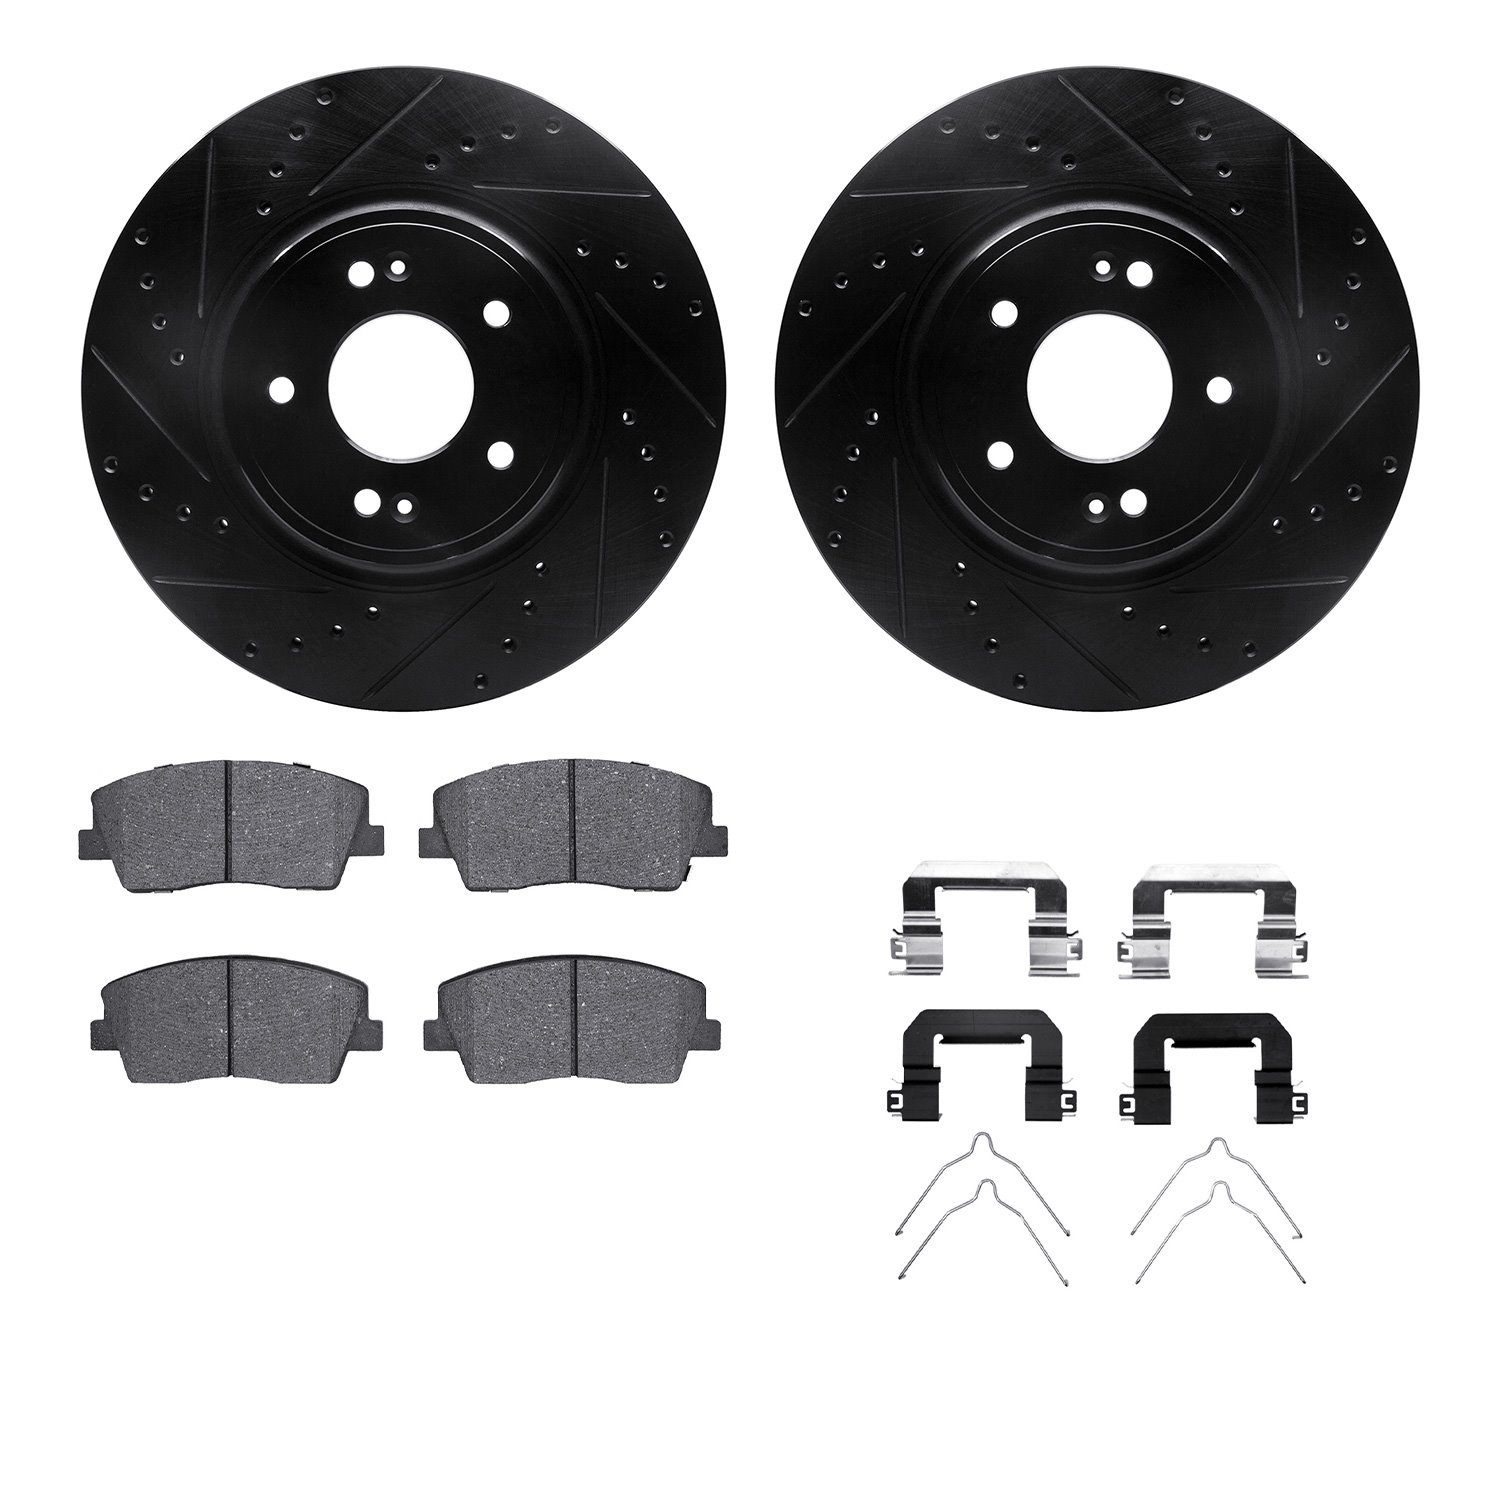 8312-21048 Drilled/Slotted Brake Rotors with 3000-Series Ceramic Brake Pads Kit & Hardware [Black], Fits Select Kia/Hyundai/Gene